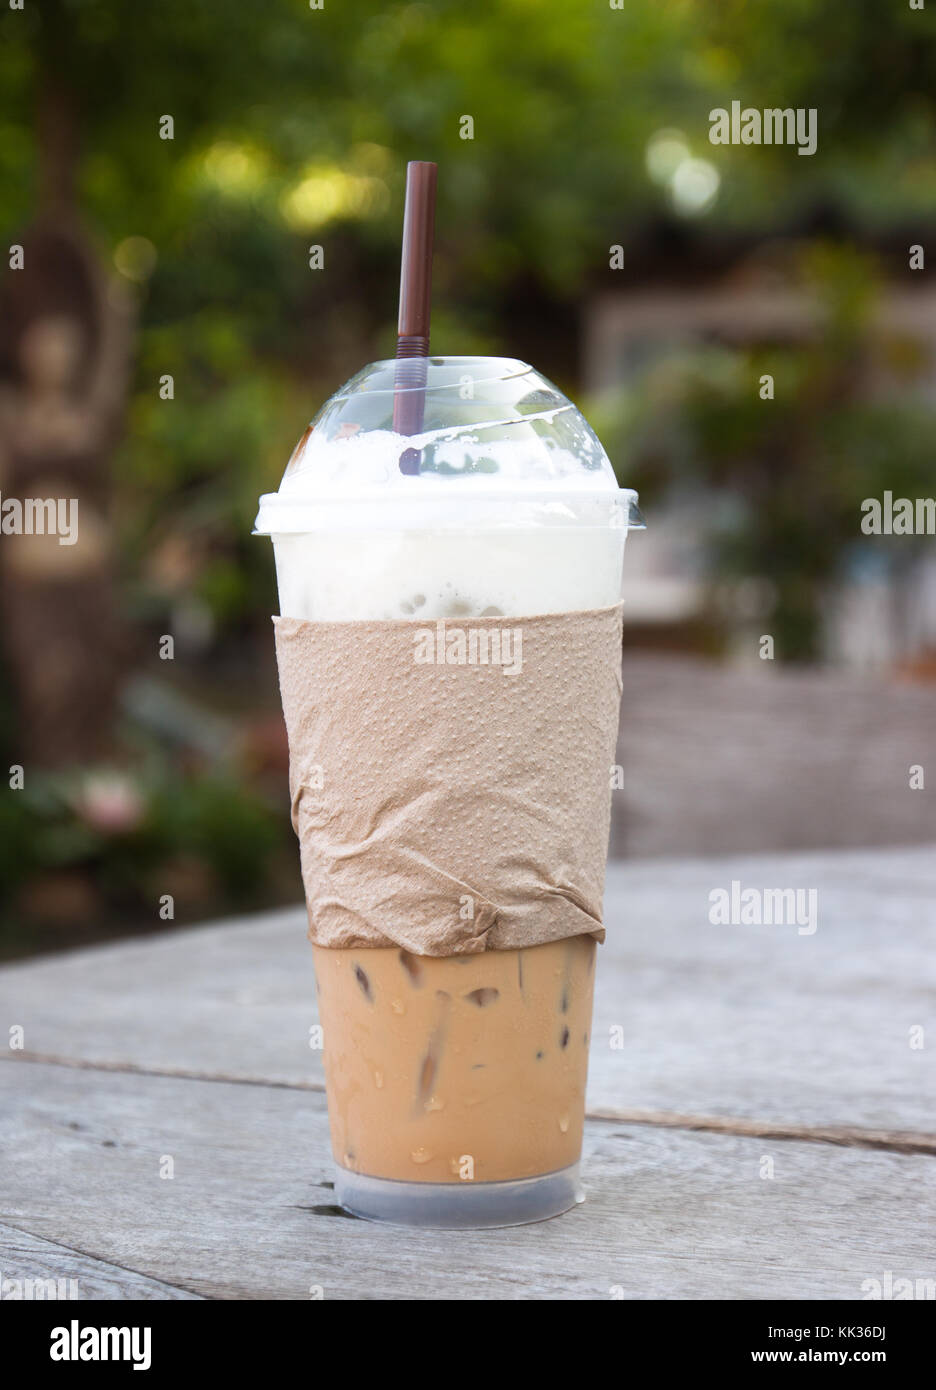 https://c8.alamy.com/comp/KK36DJ/iced-coffee-in-takeaway-cup-KK36DJ.jpg